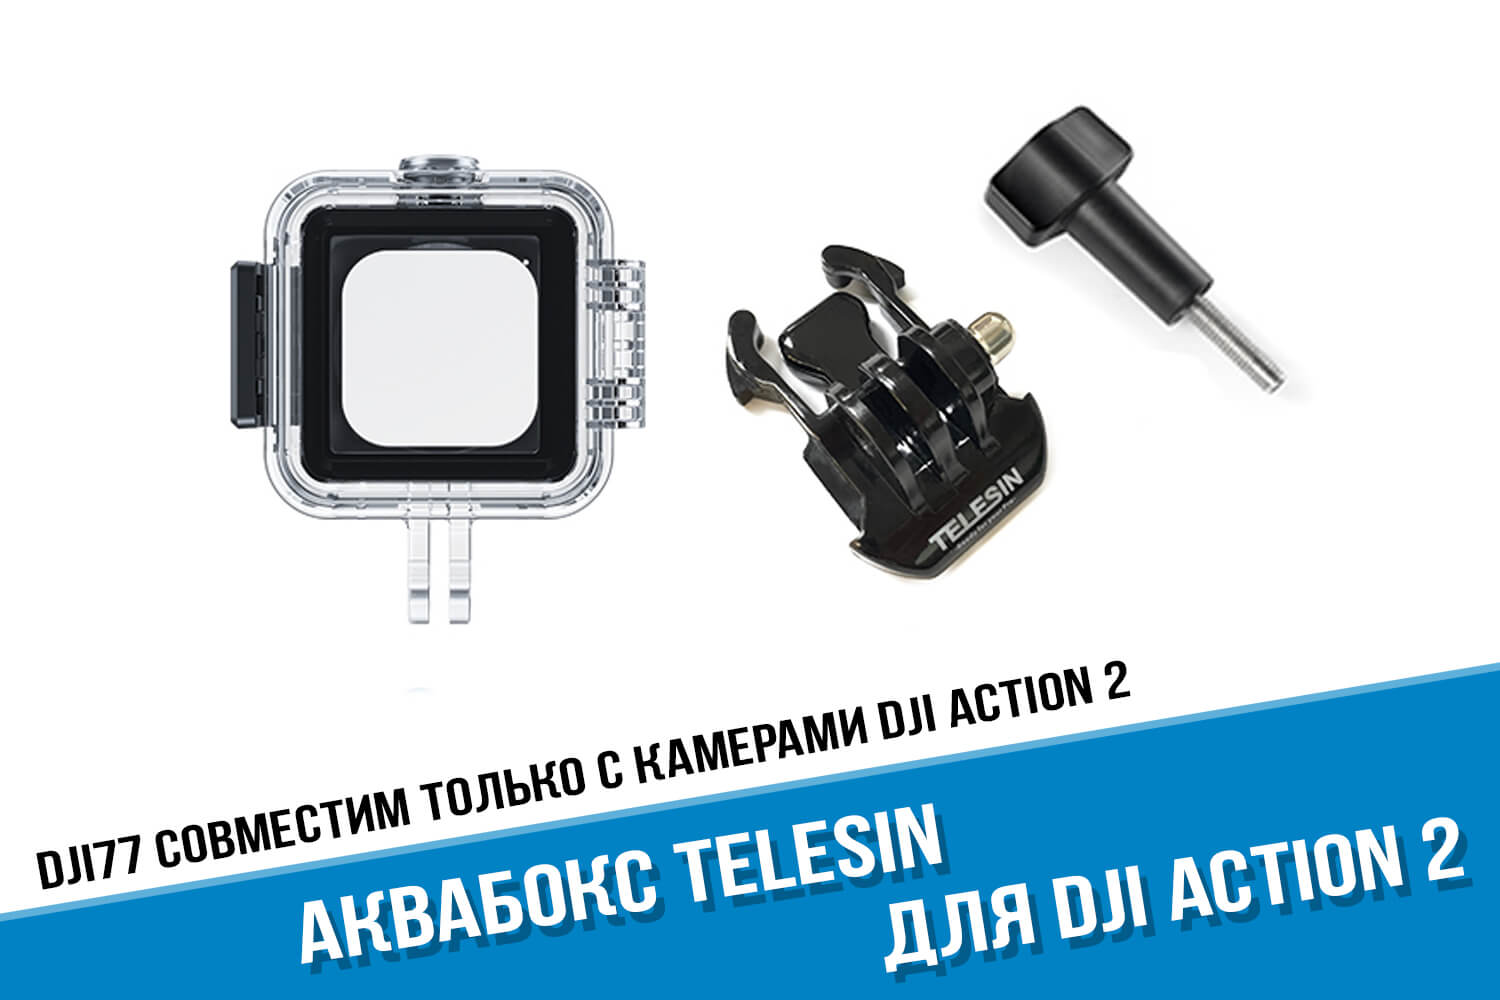 Аквабокс DJI Action 2 фирмы Telesin